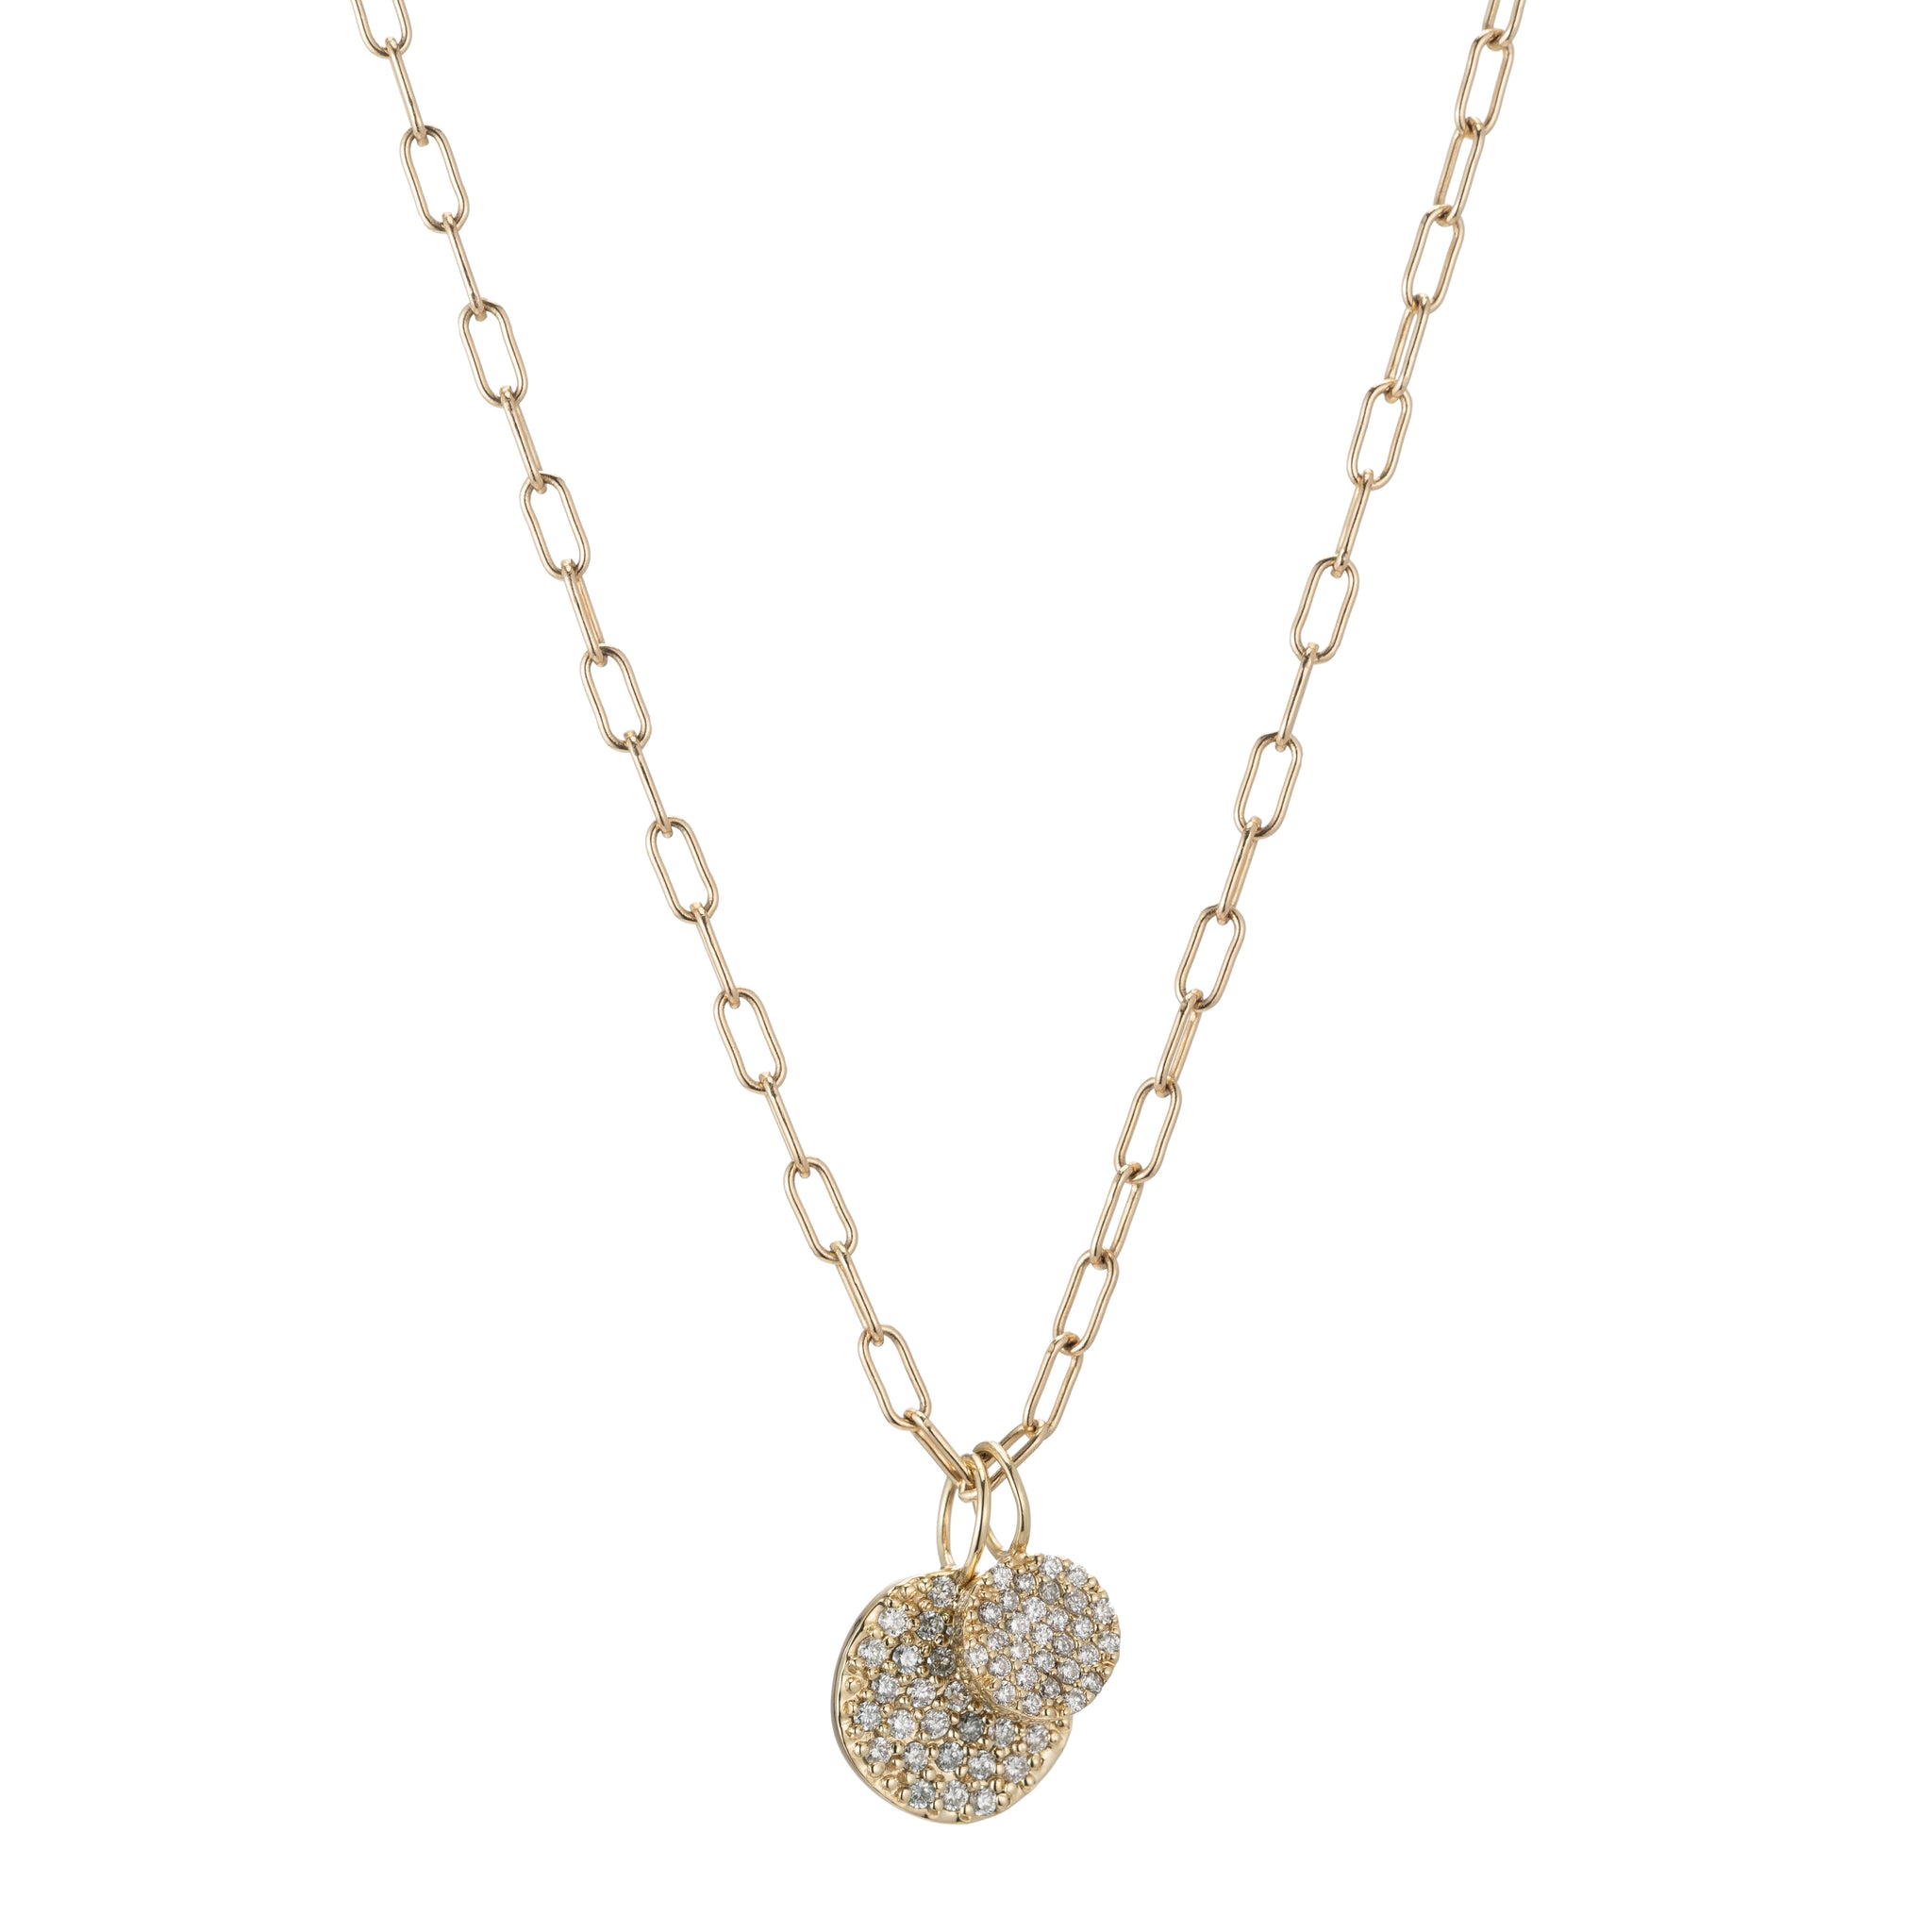 ali grace jewelry diamond charm necklace handmade in nyc